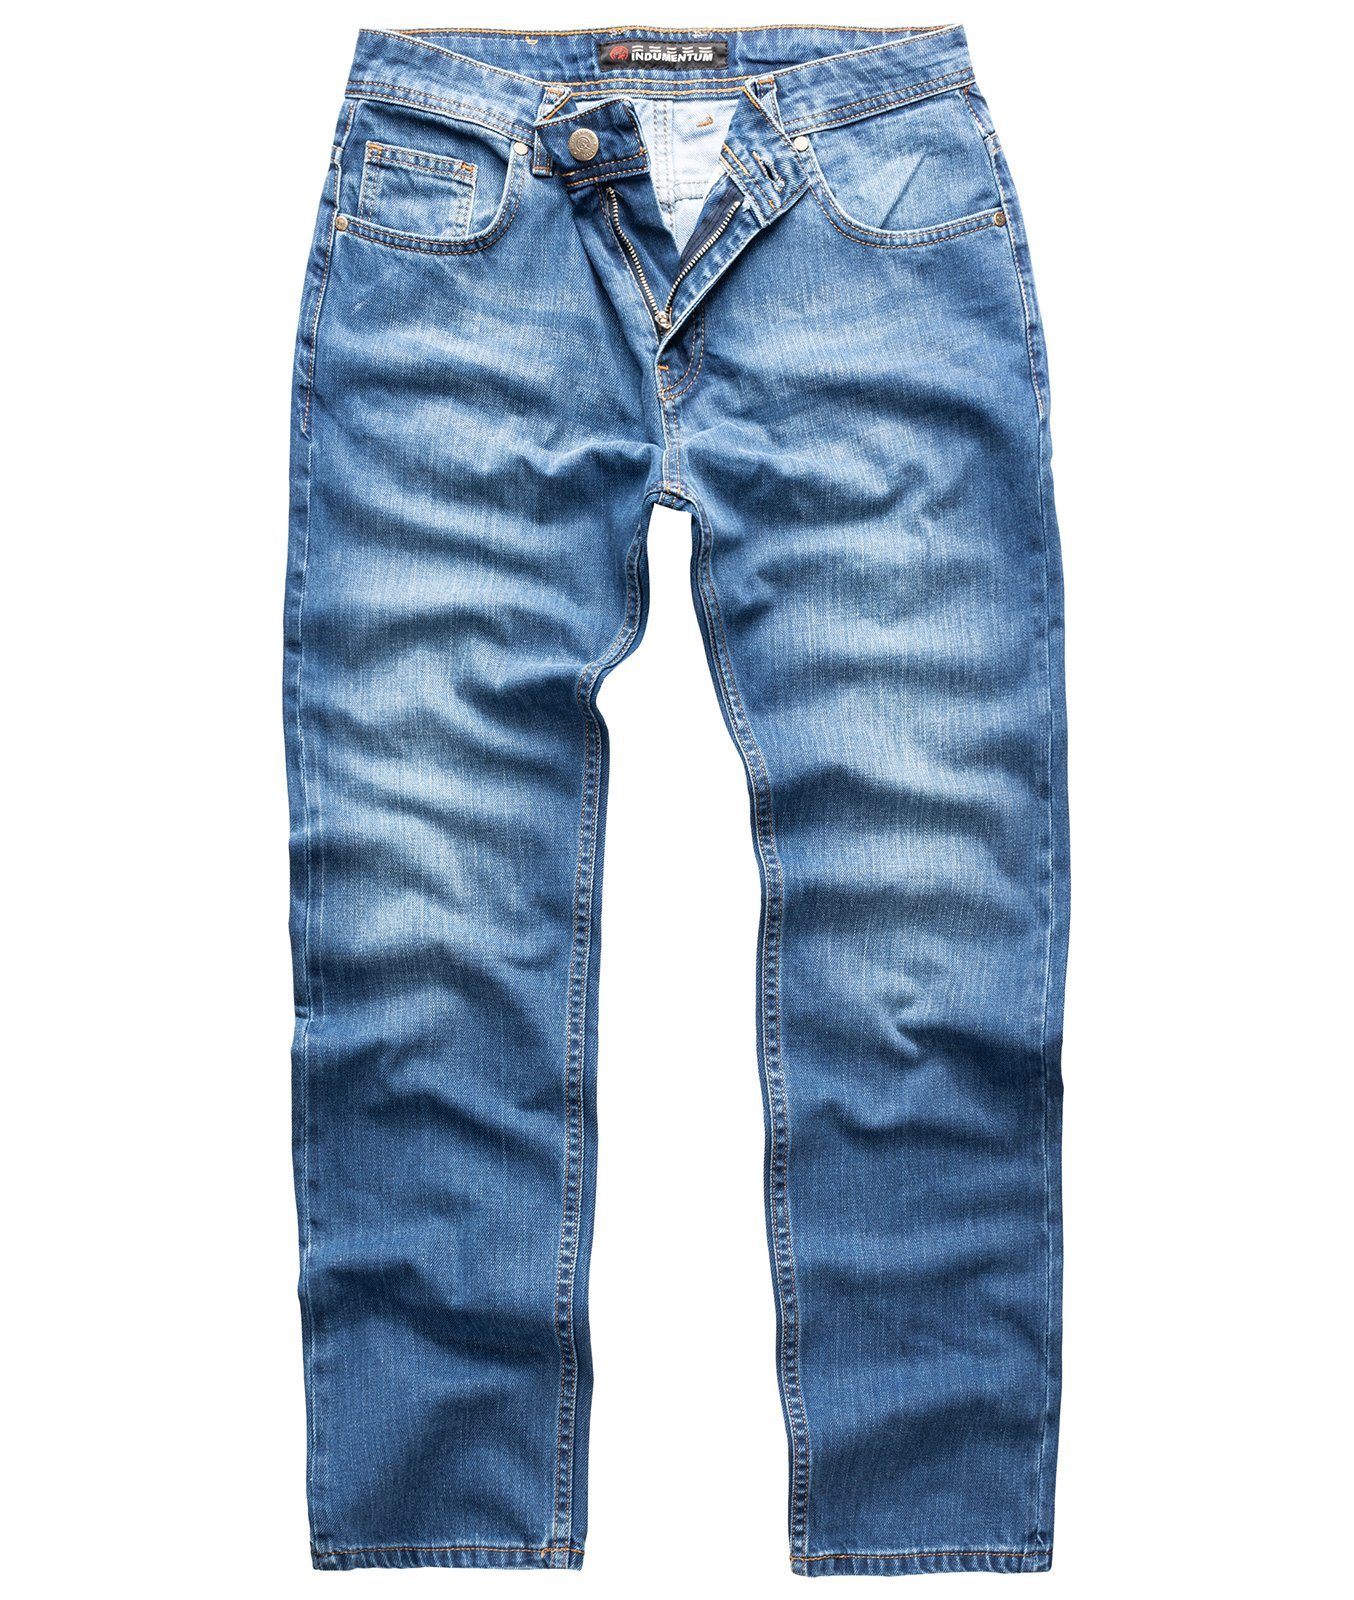 Indumentum Straight-Jeans Herren IC-701 Comfort Jeans Fit